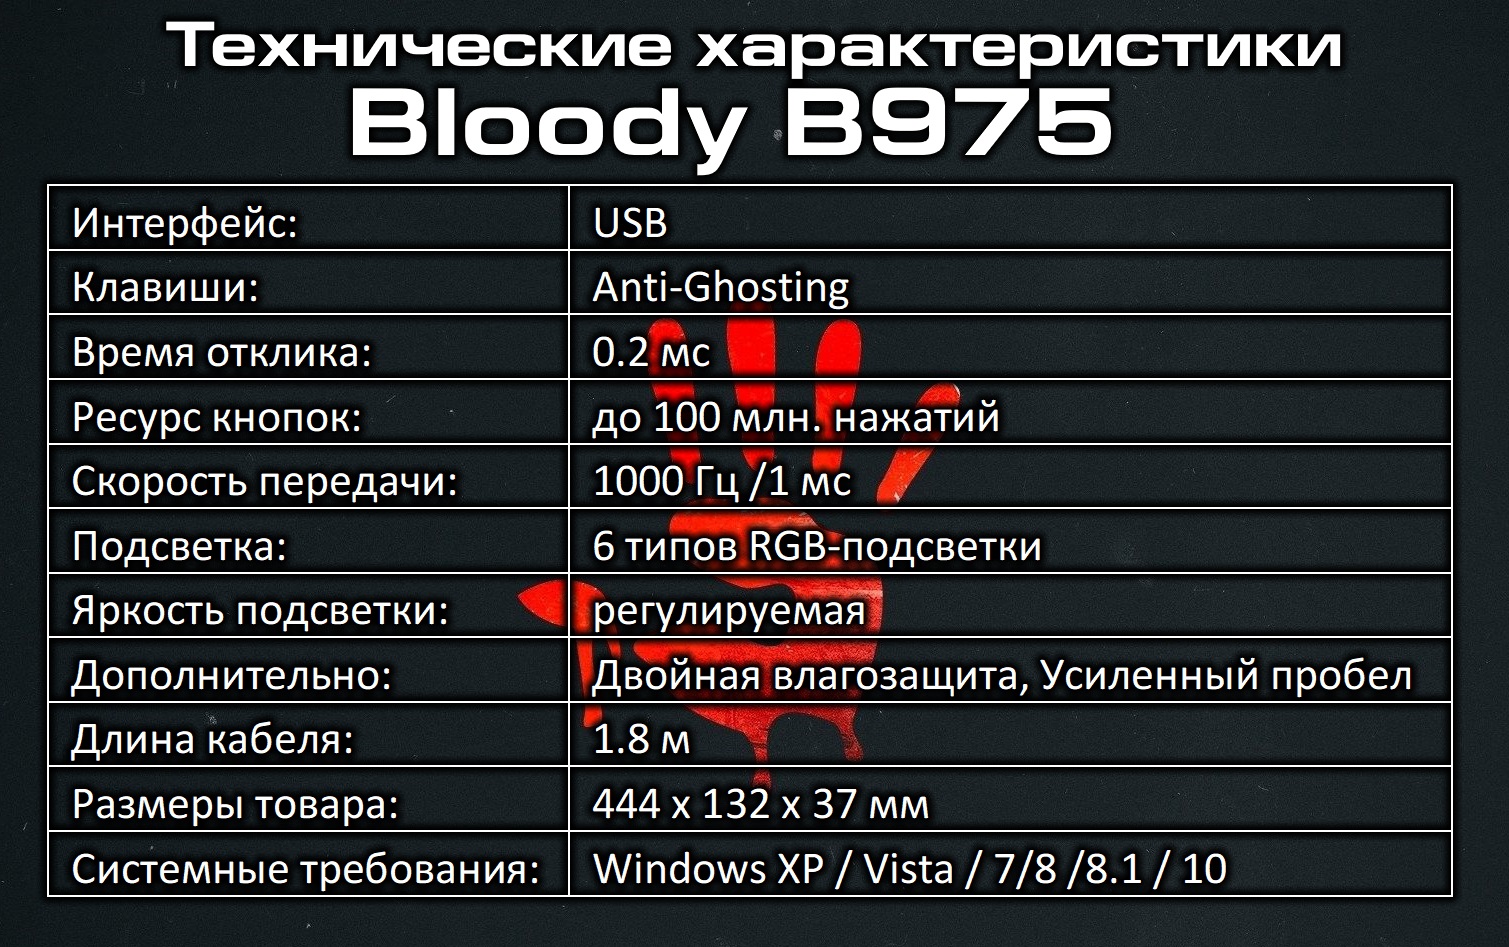 Bloody B975 